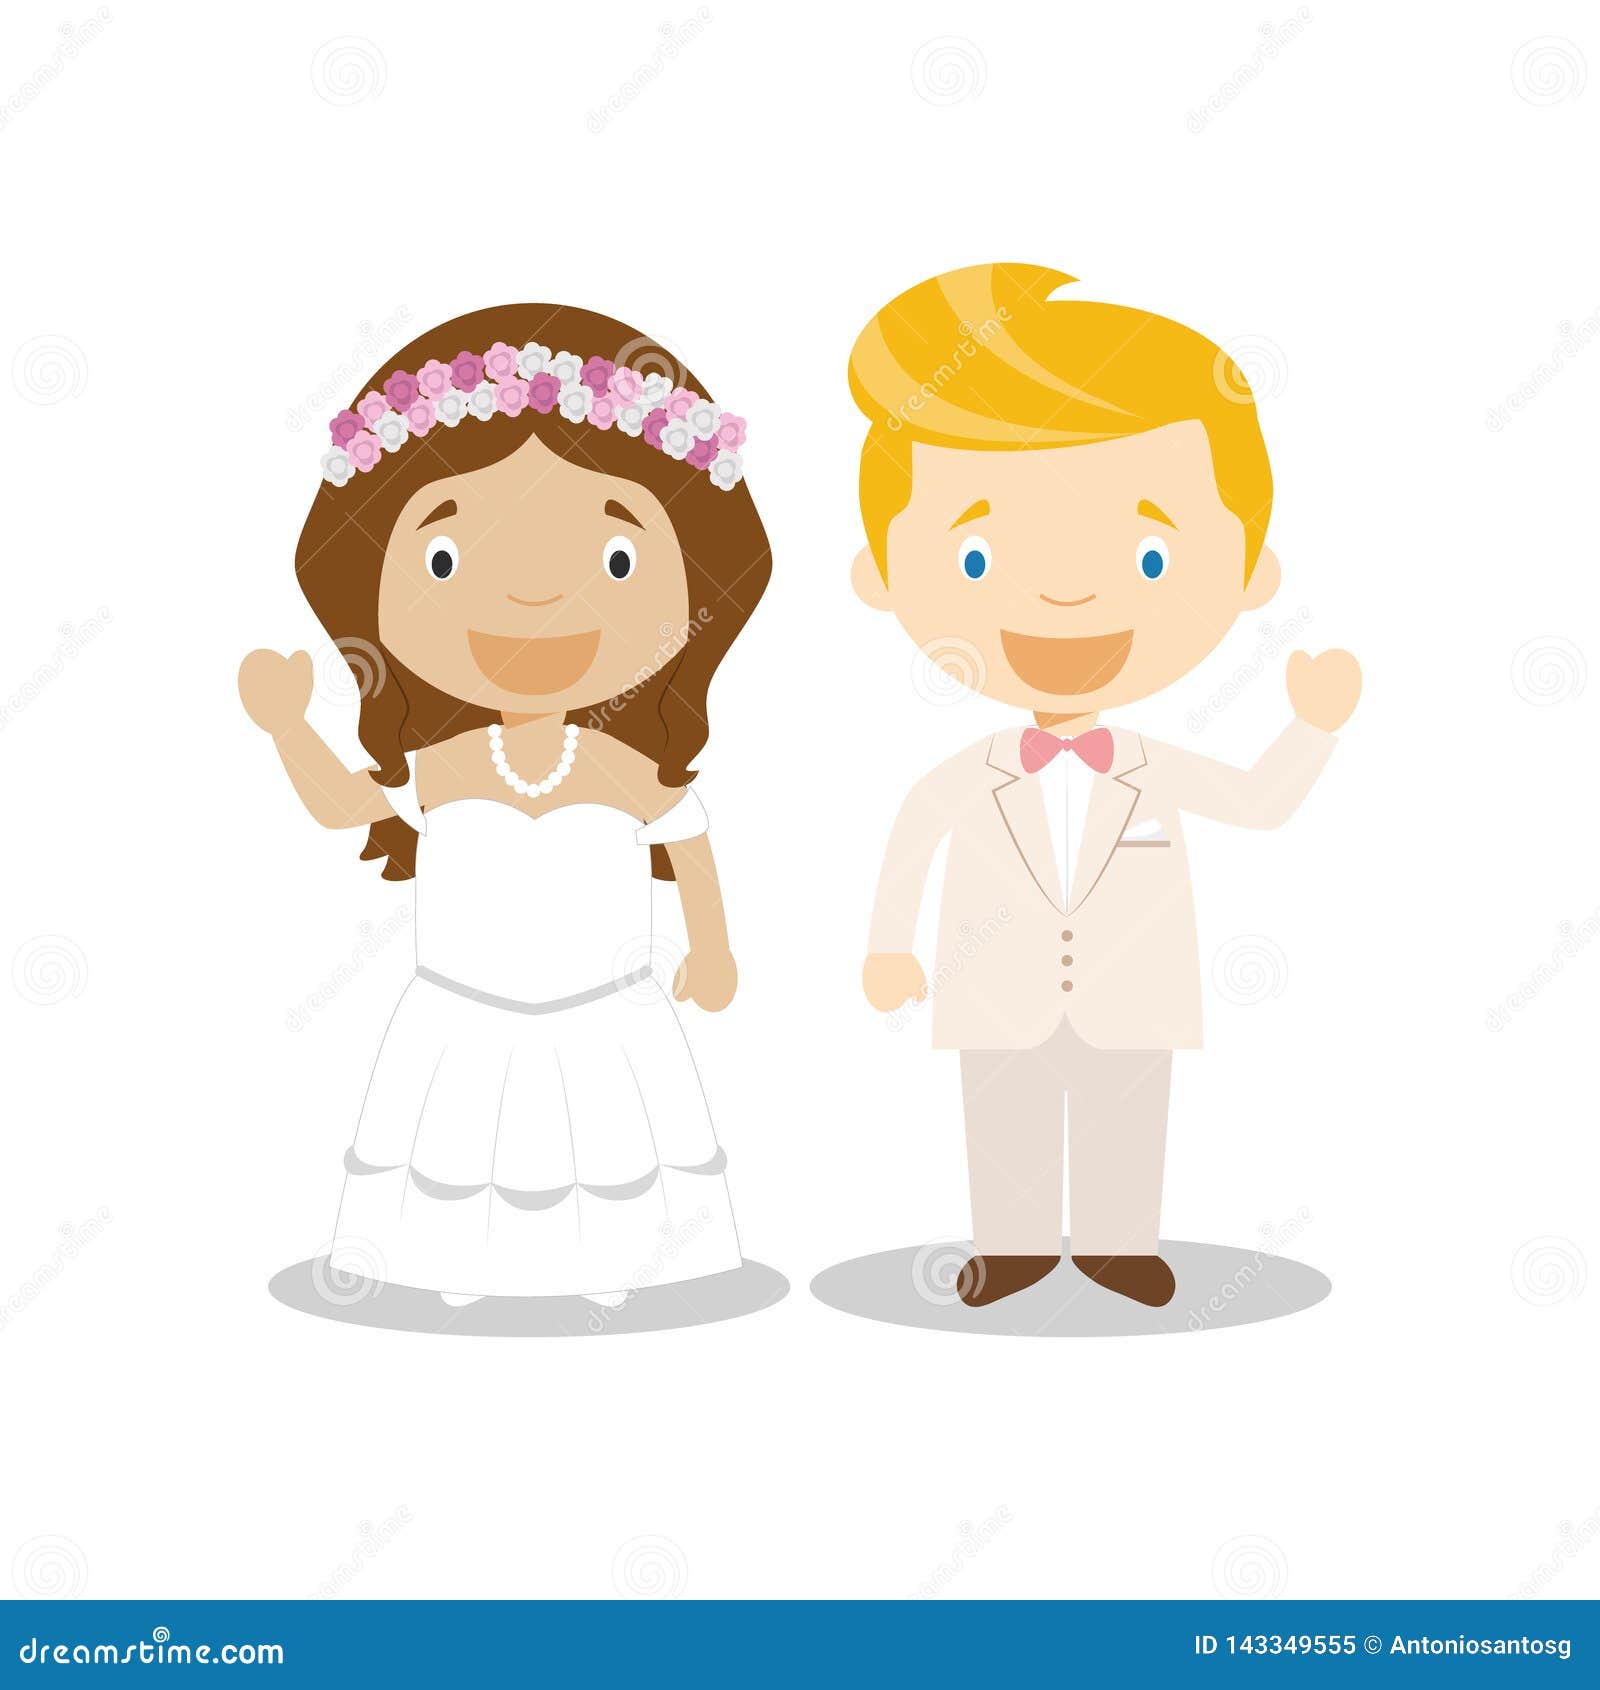 mestizo bride and caucasian bridegroom interracial newlywed couple in cartoon style  